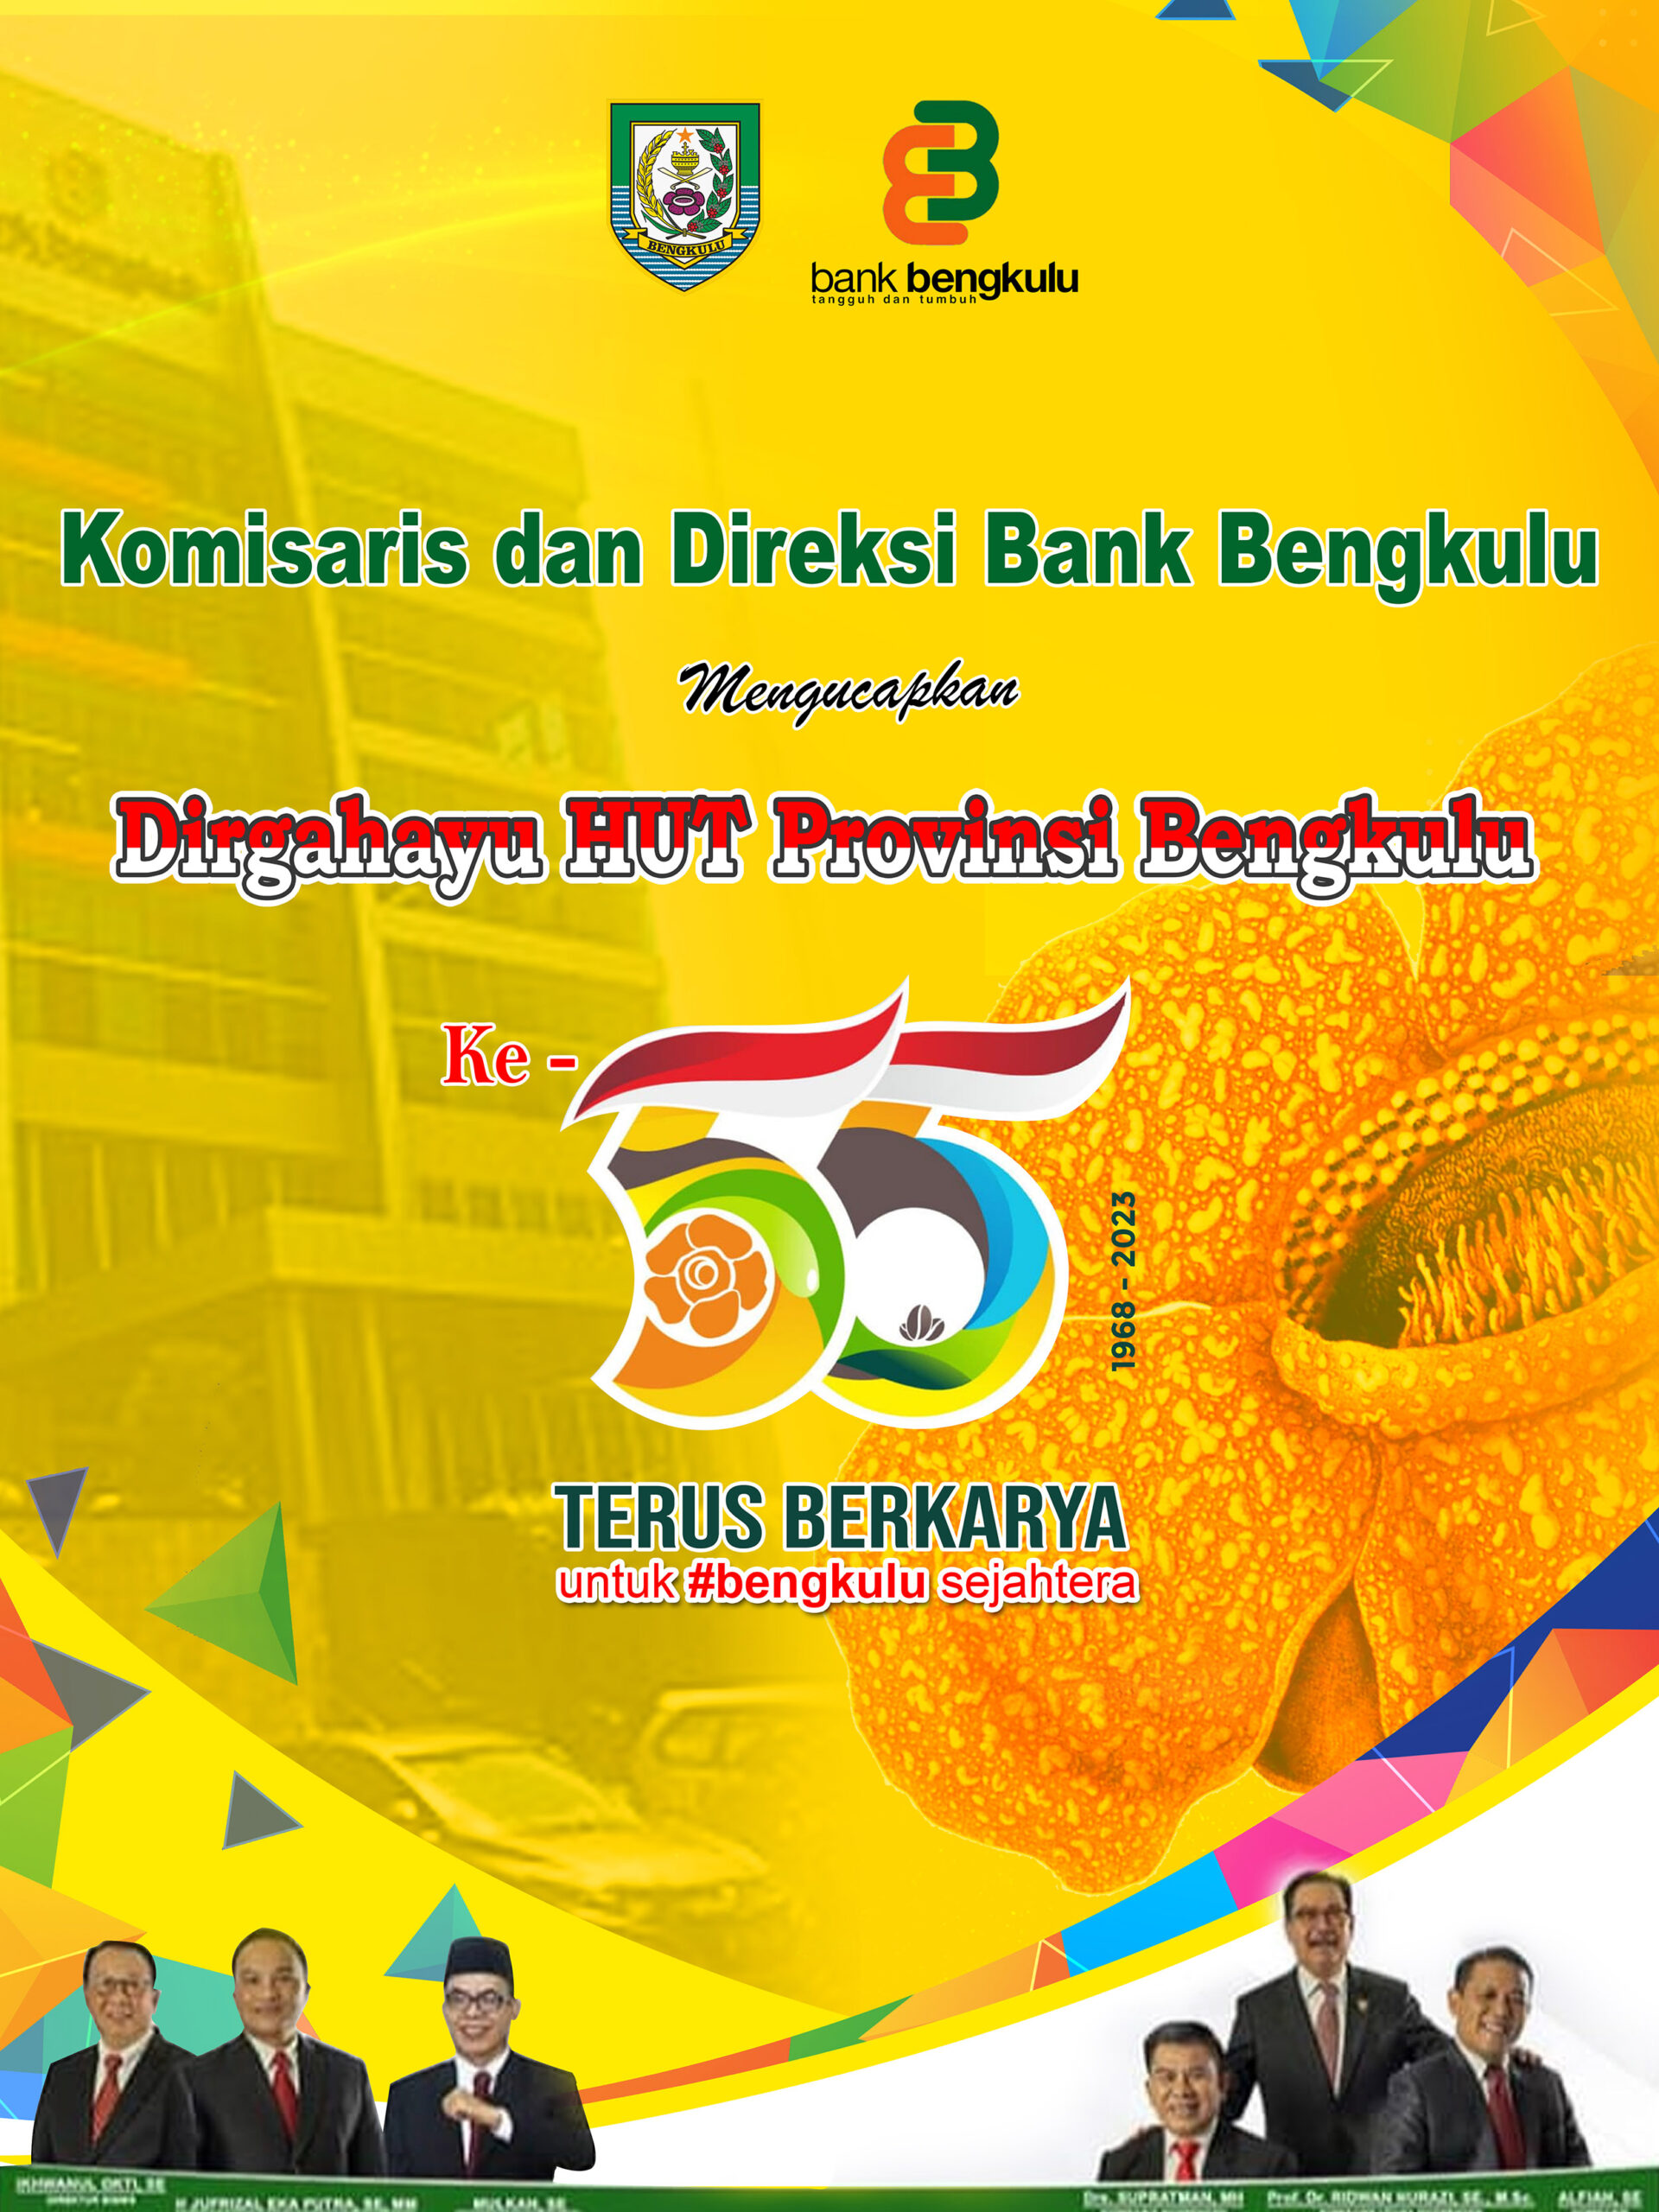 Komisaris dan Direksi Bank Bengkulu Mengucapkan Selamat HUT Provinsi Bengkulu Ke-55